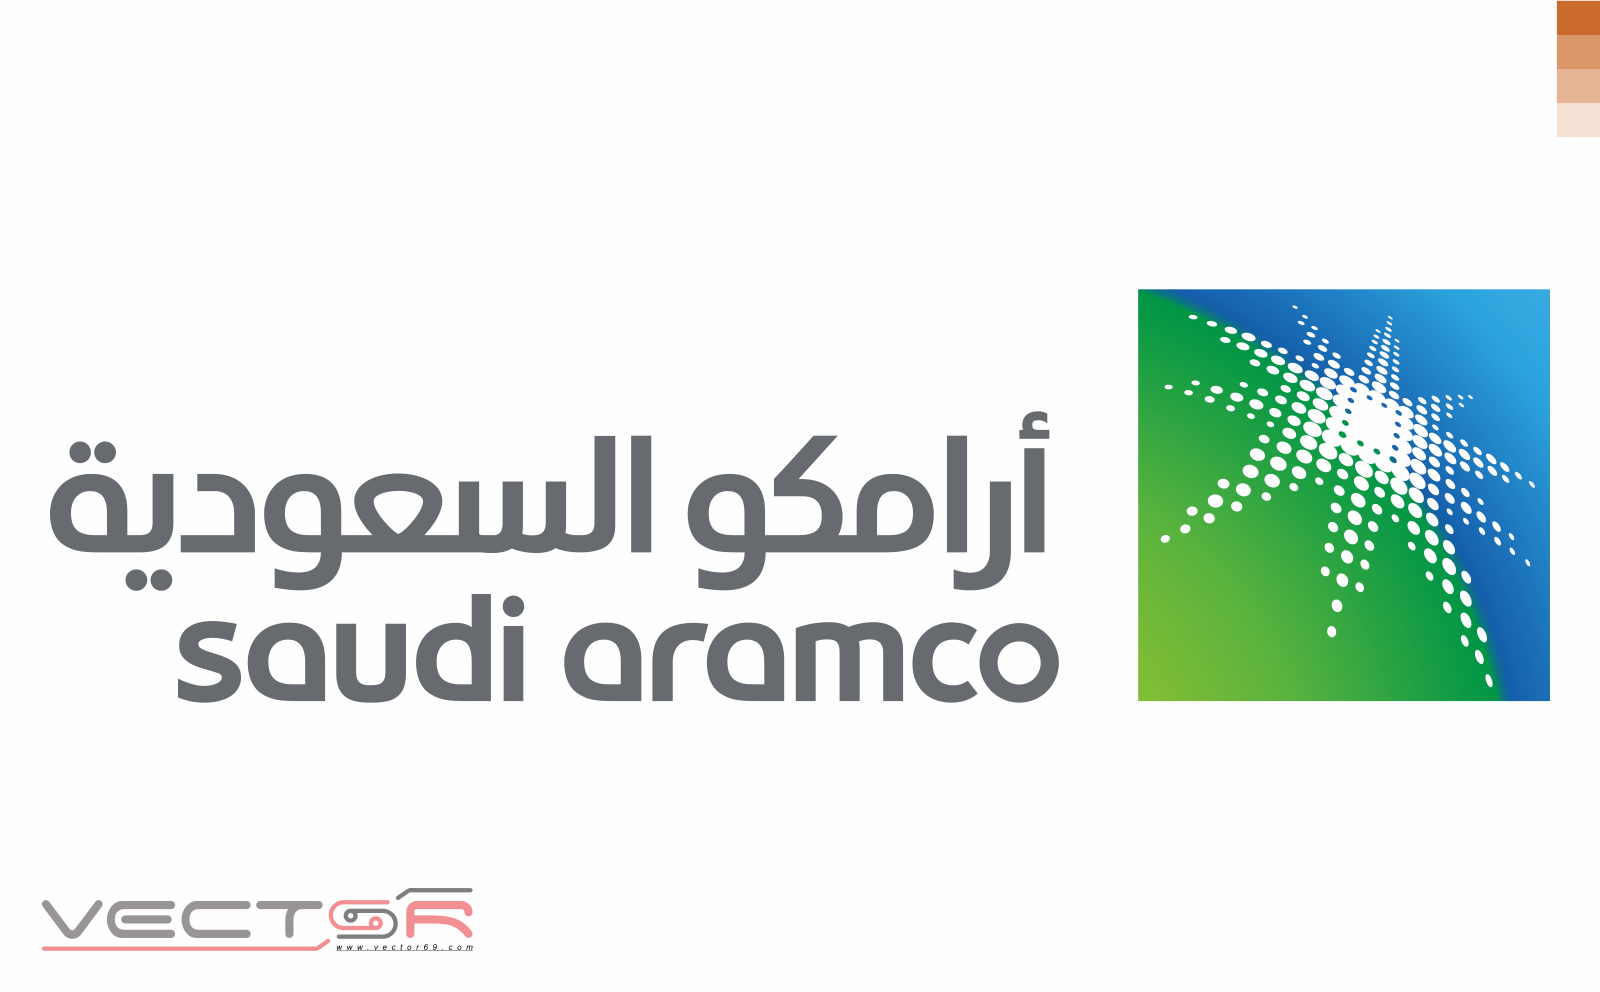 Saudi Arabian Oil Group (Saudi Aramco) Logo - Download Vector File AI (Adobe Illustrator)